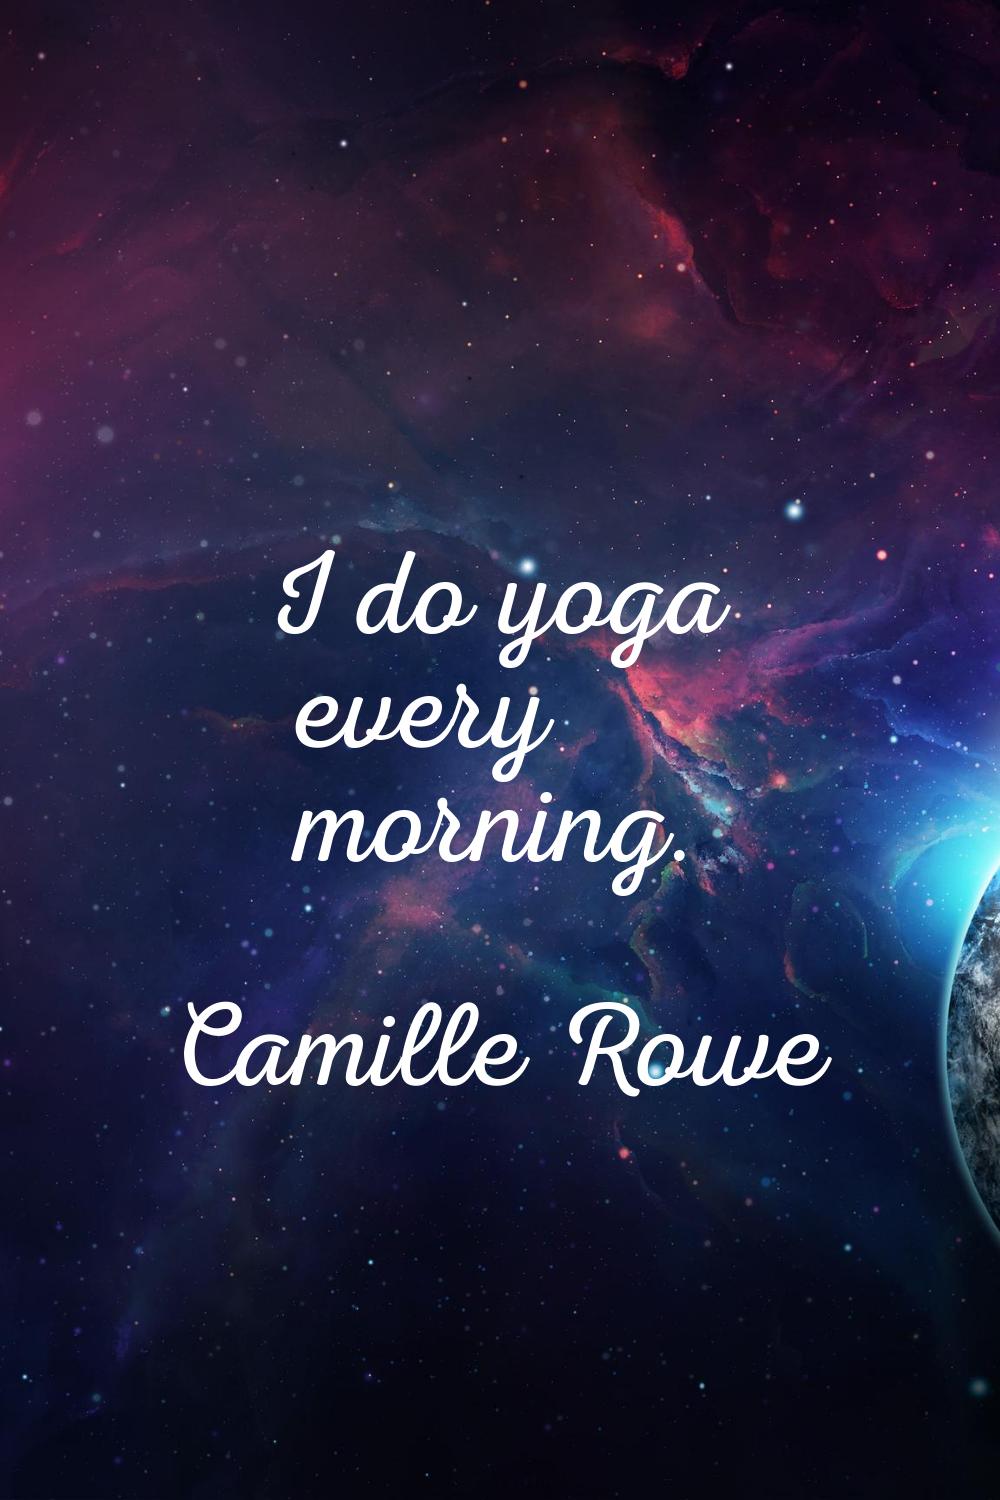 I do yoga every morning.